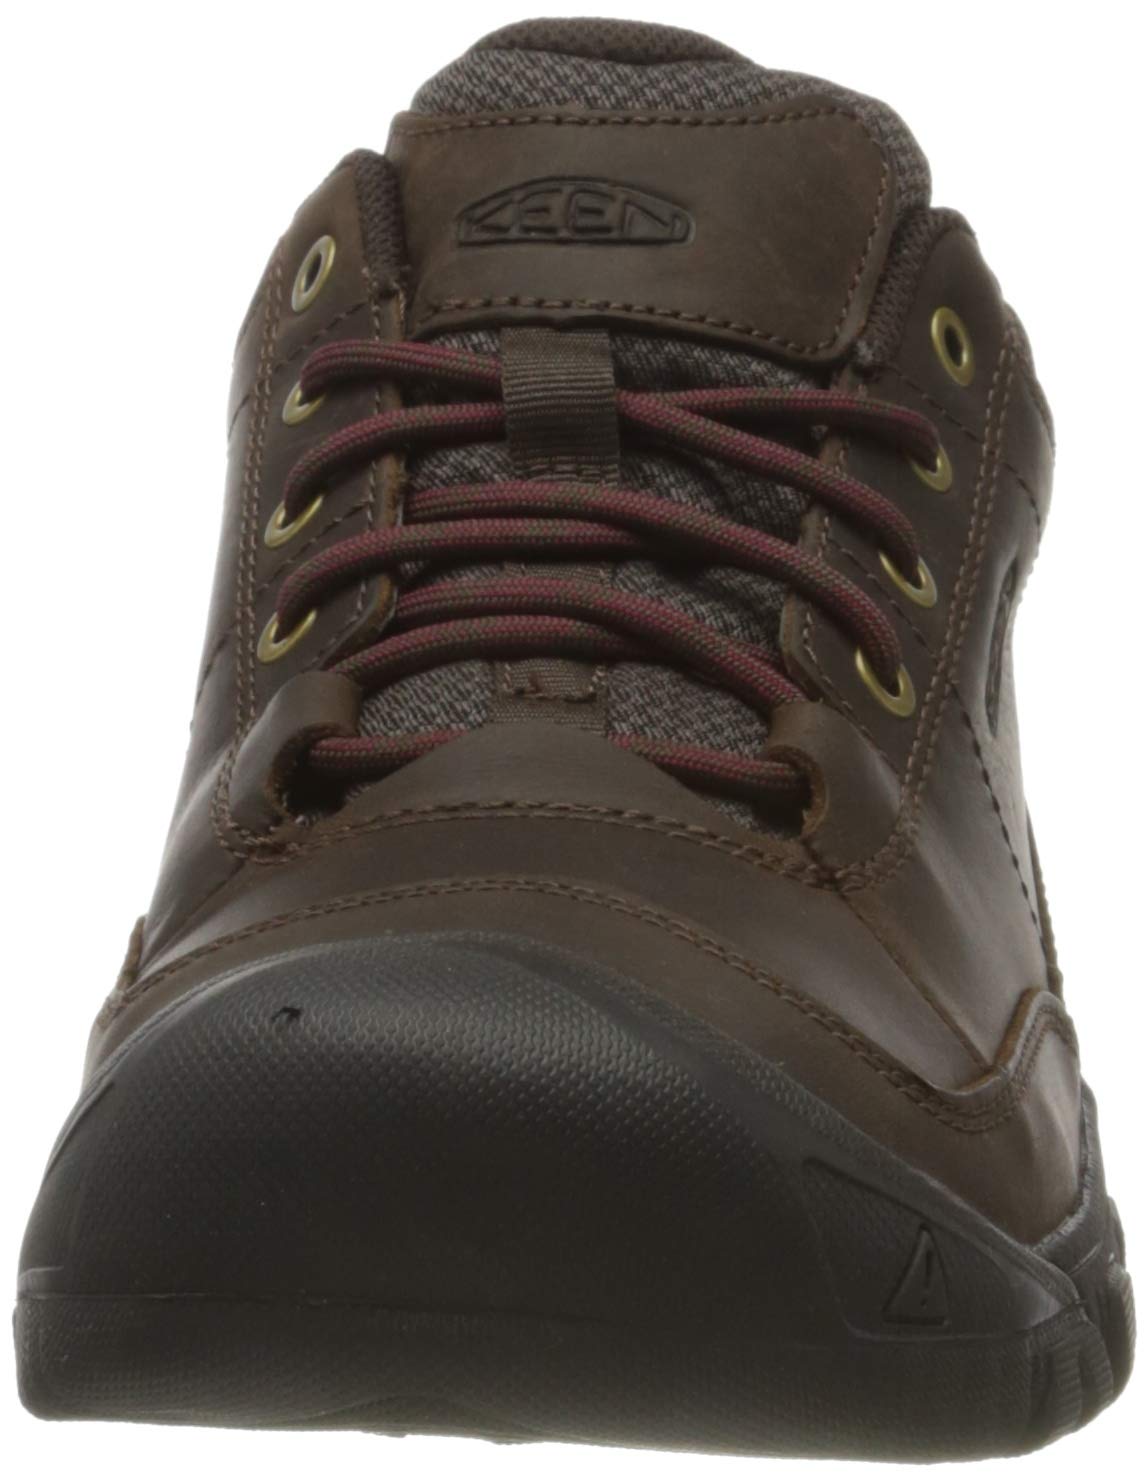 KEEN Men's Targhee 3 Oxford Casual Hiking Shoes